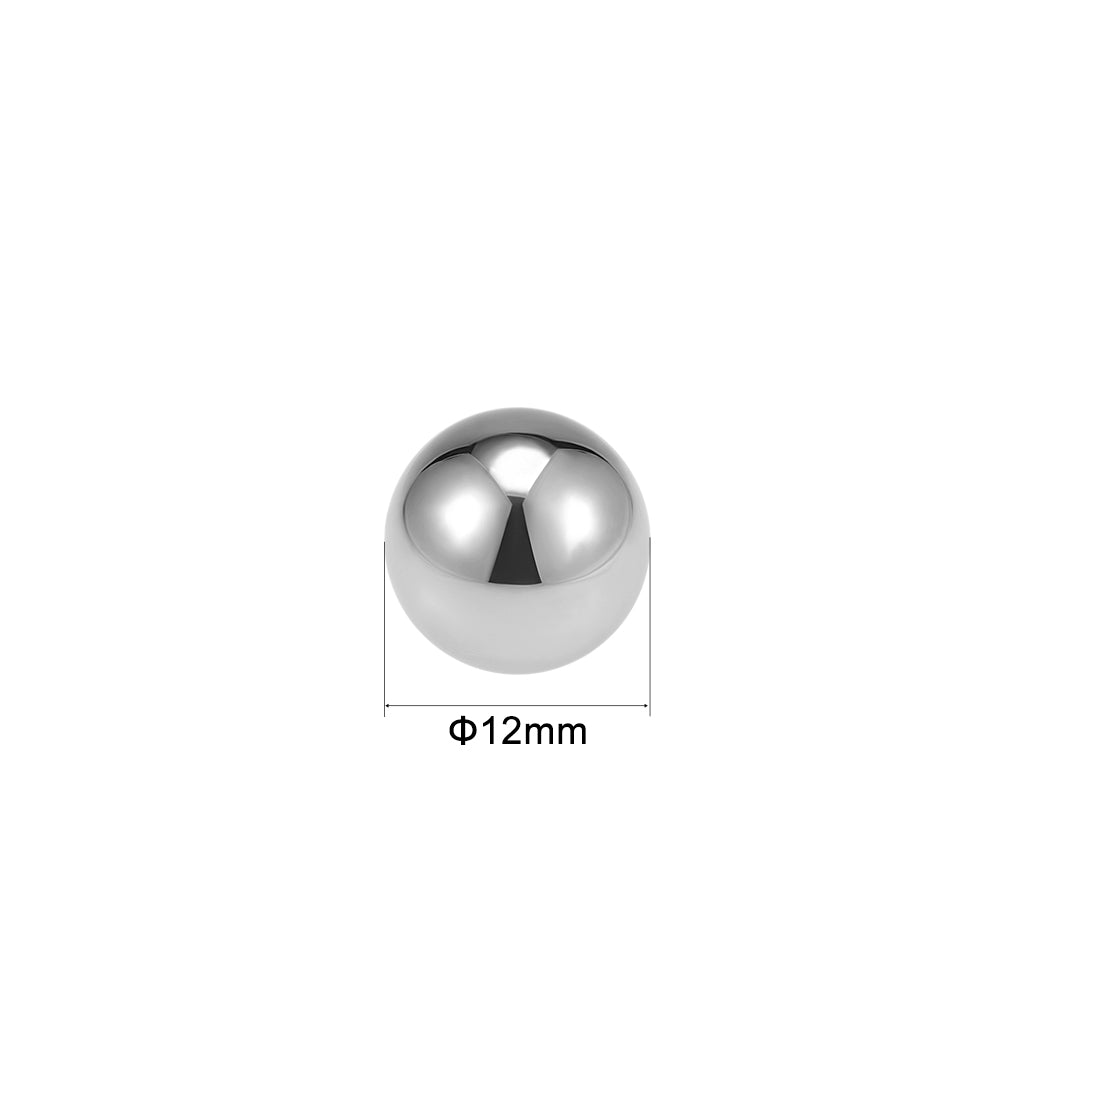 uxcell Uxcell 9mm Precision Chrome Steel Bearing Balls G25 25pcs